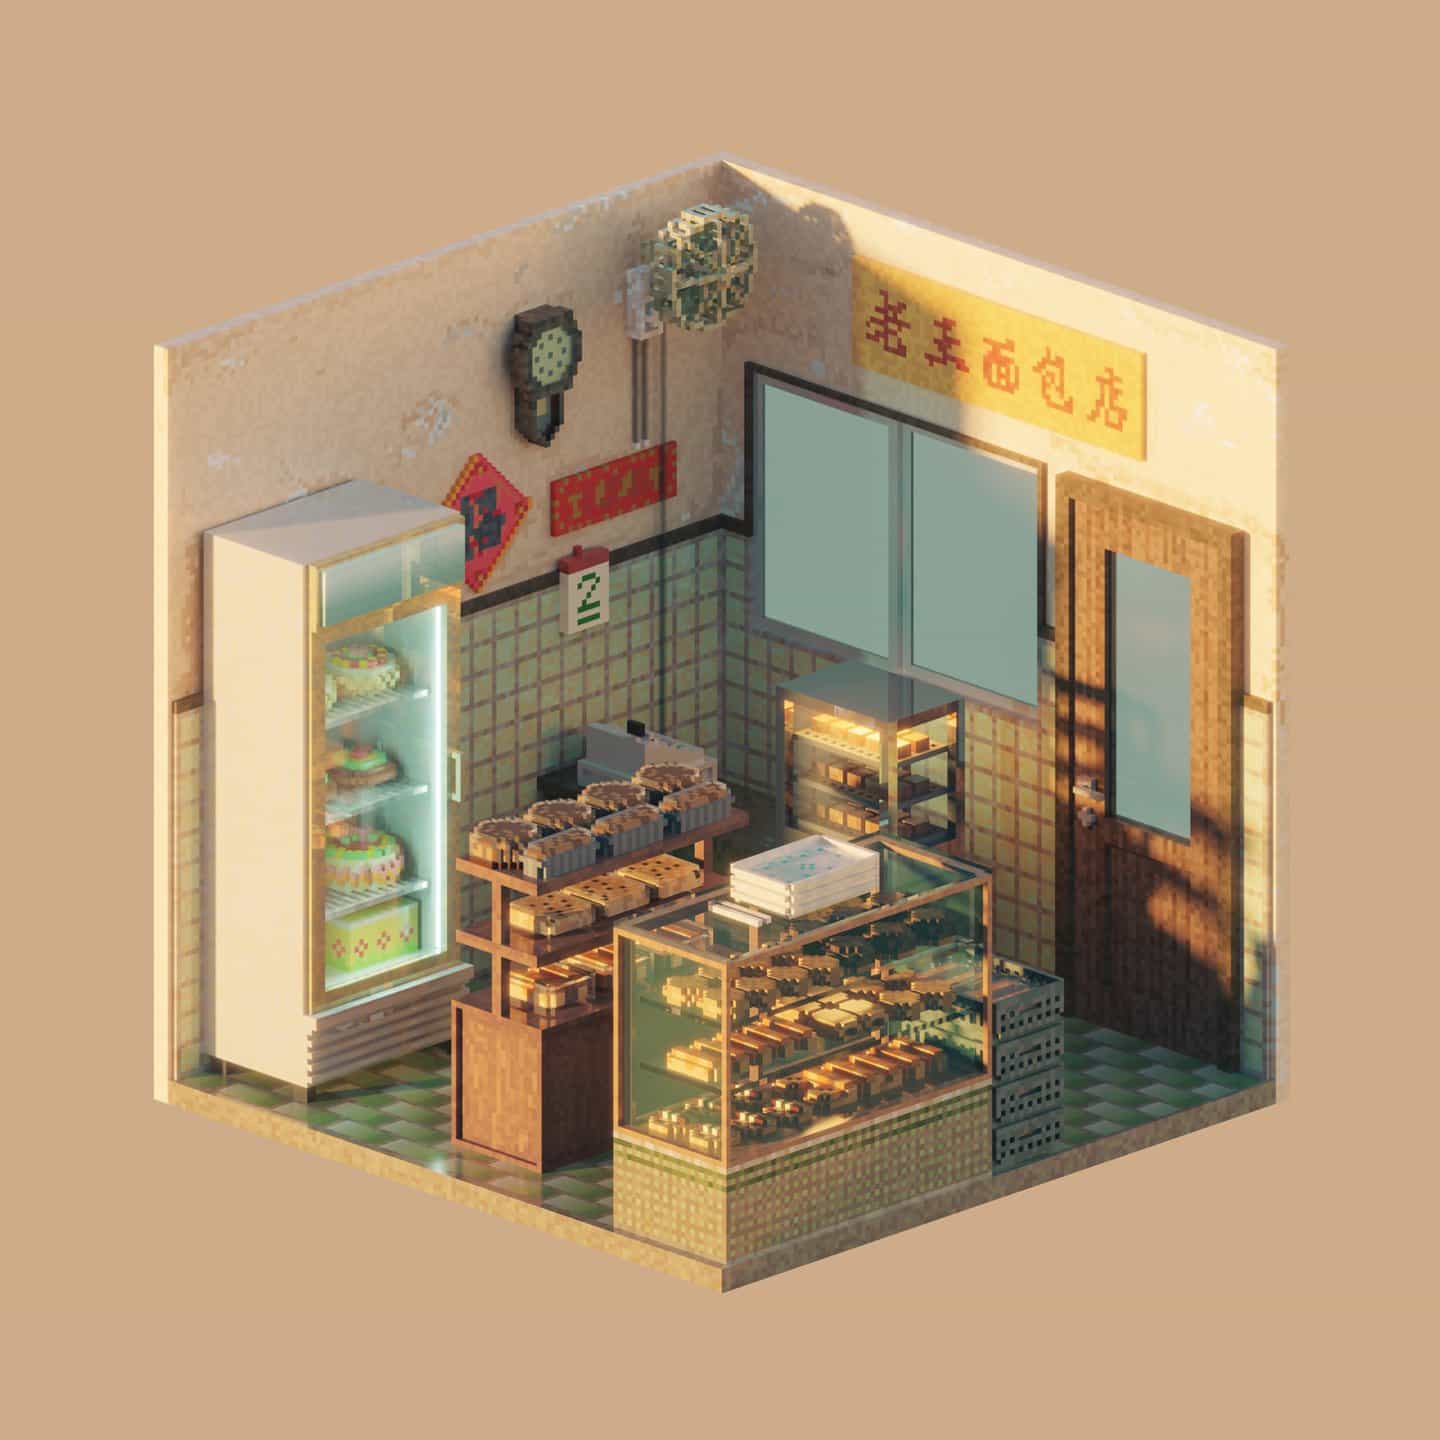 Shin Oh: Bakery Shop, serie Tiny Voxel Shops de 126³ (Copyright © Shin Oh, 2021)